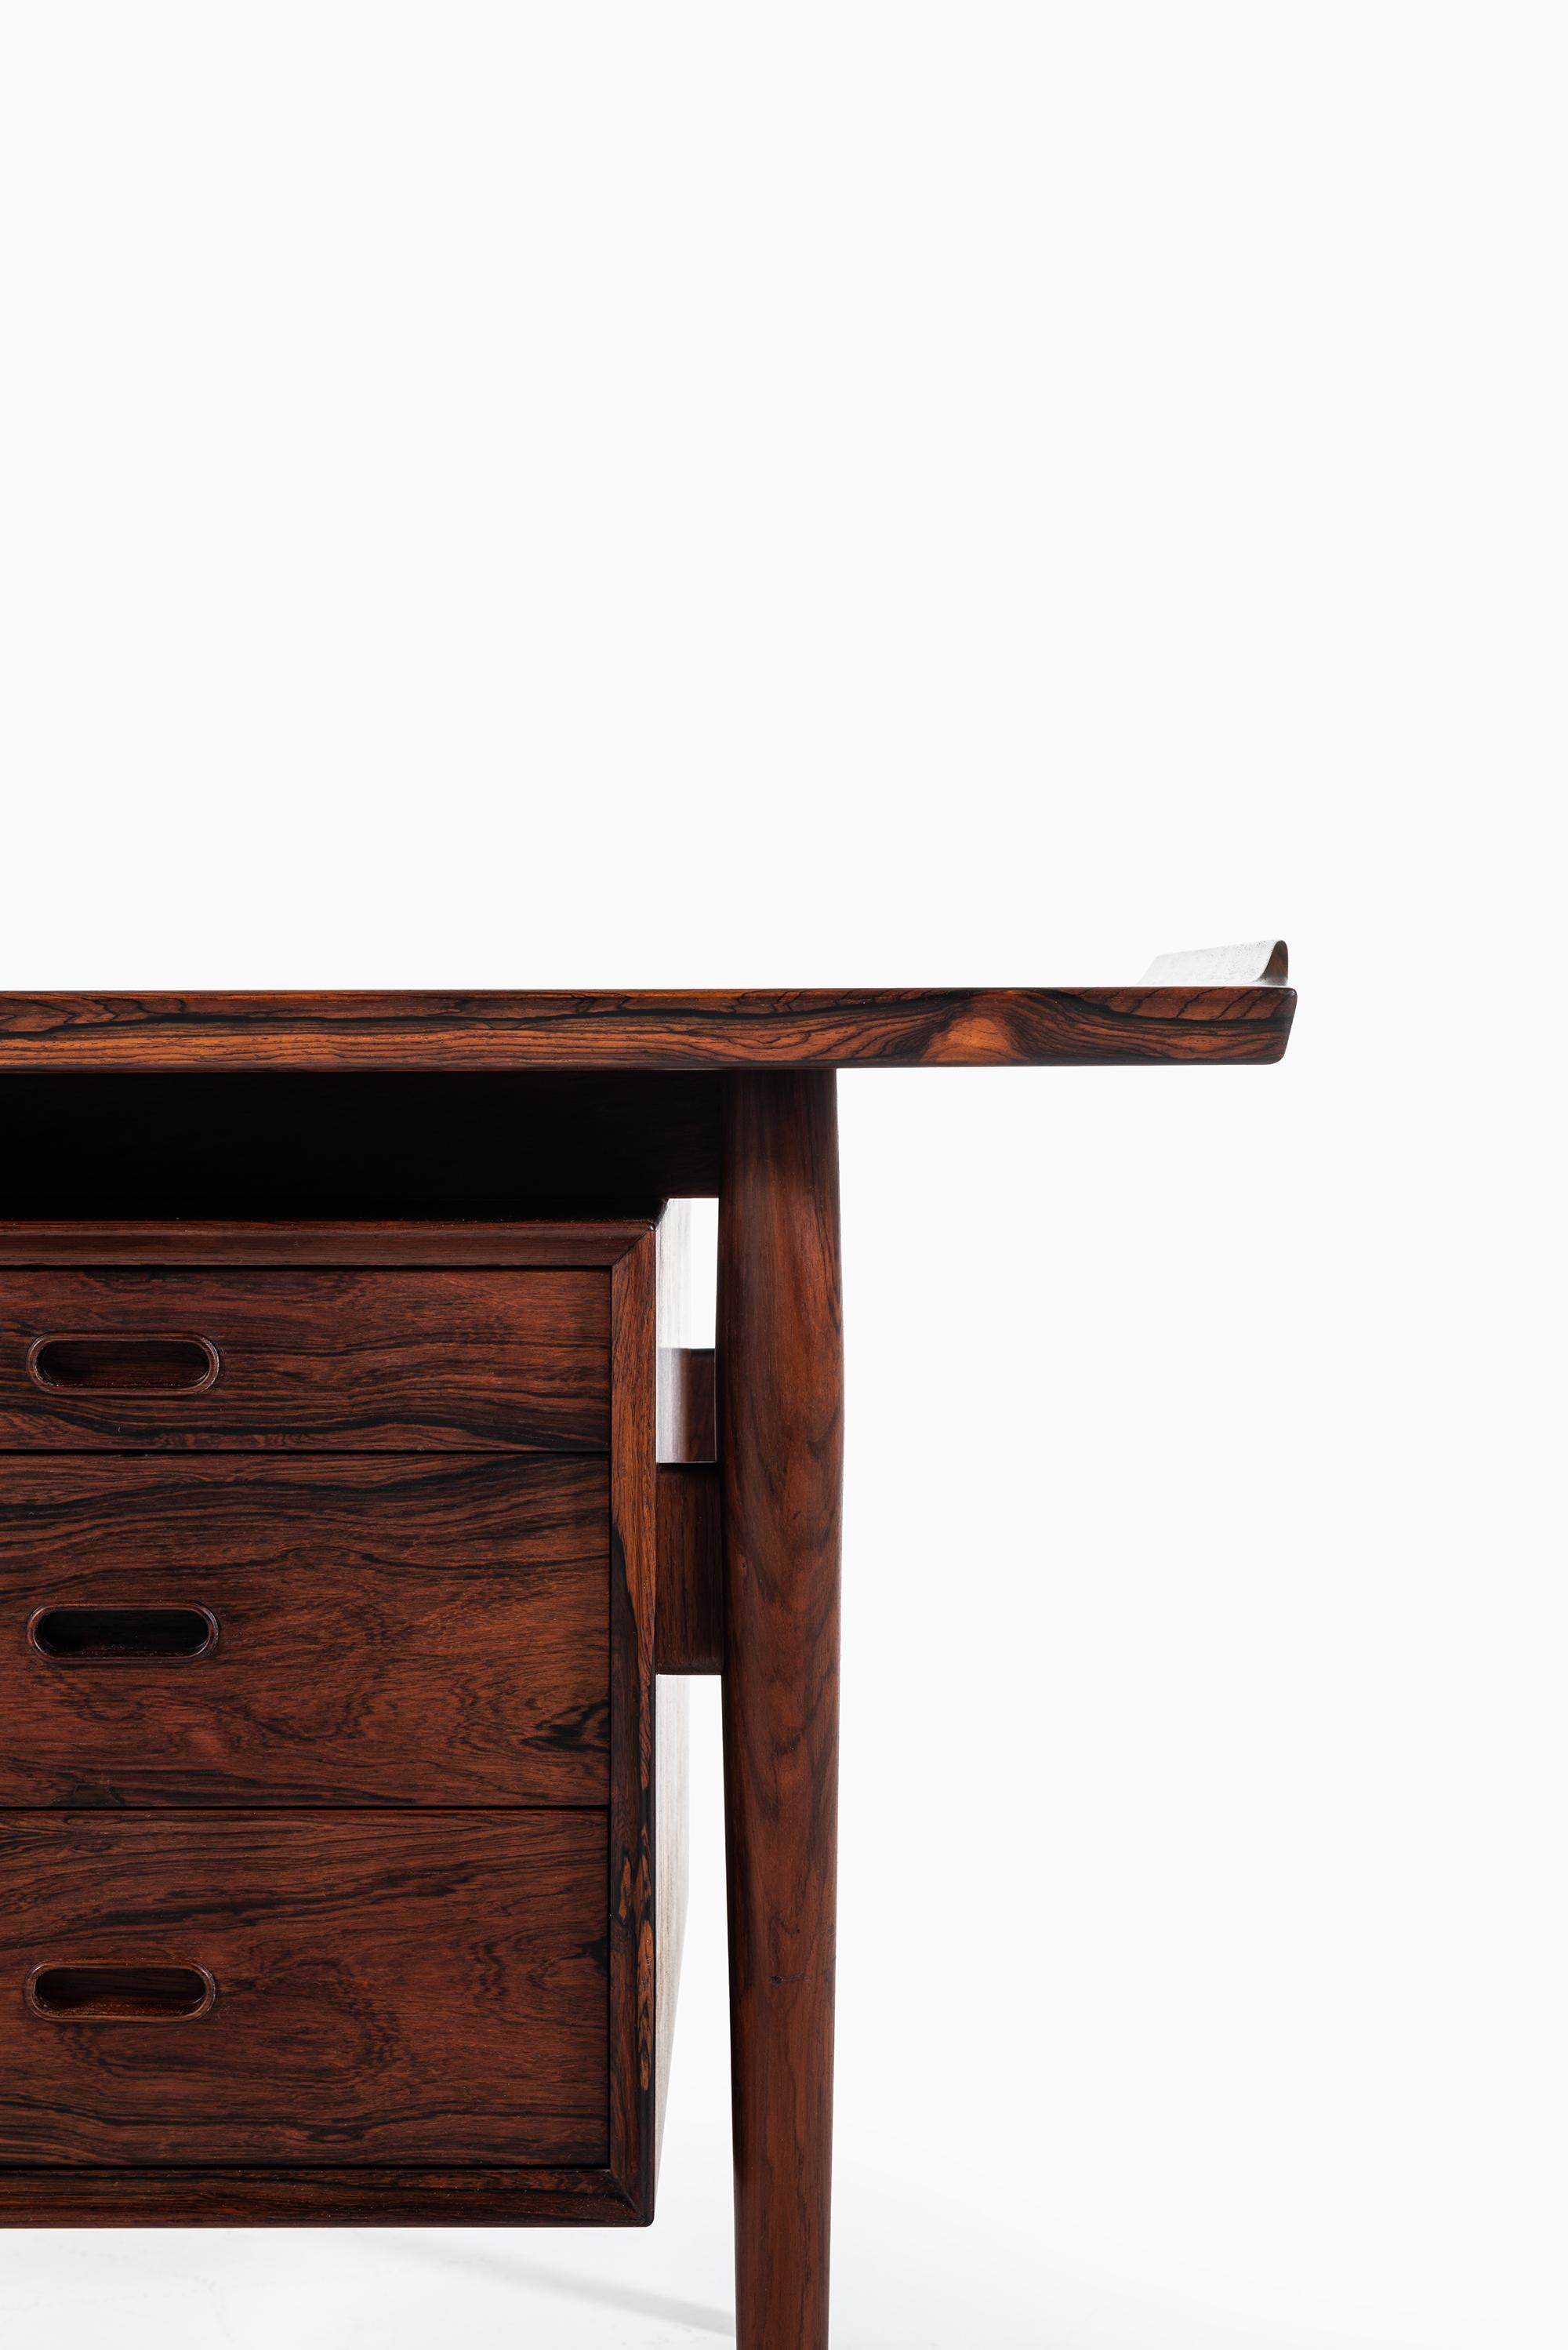 Rare desk model 205 designed by Arne Vodder. Produced by Sibast møbelfabrik in Denmark.